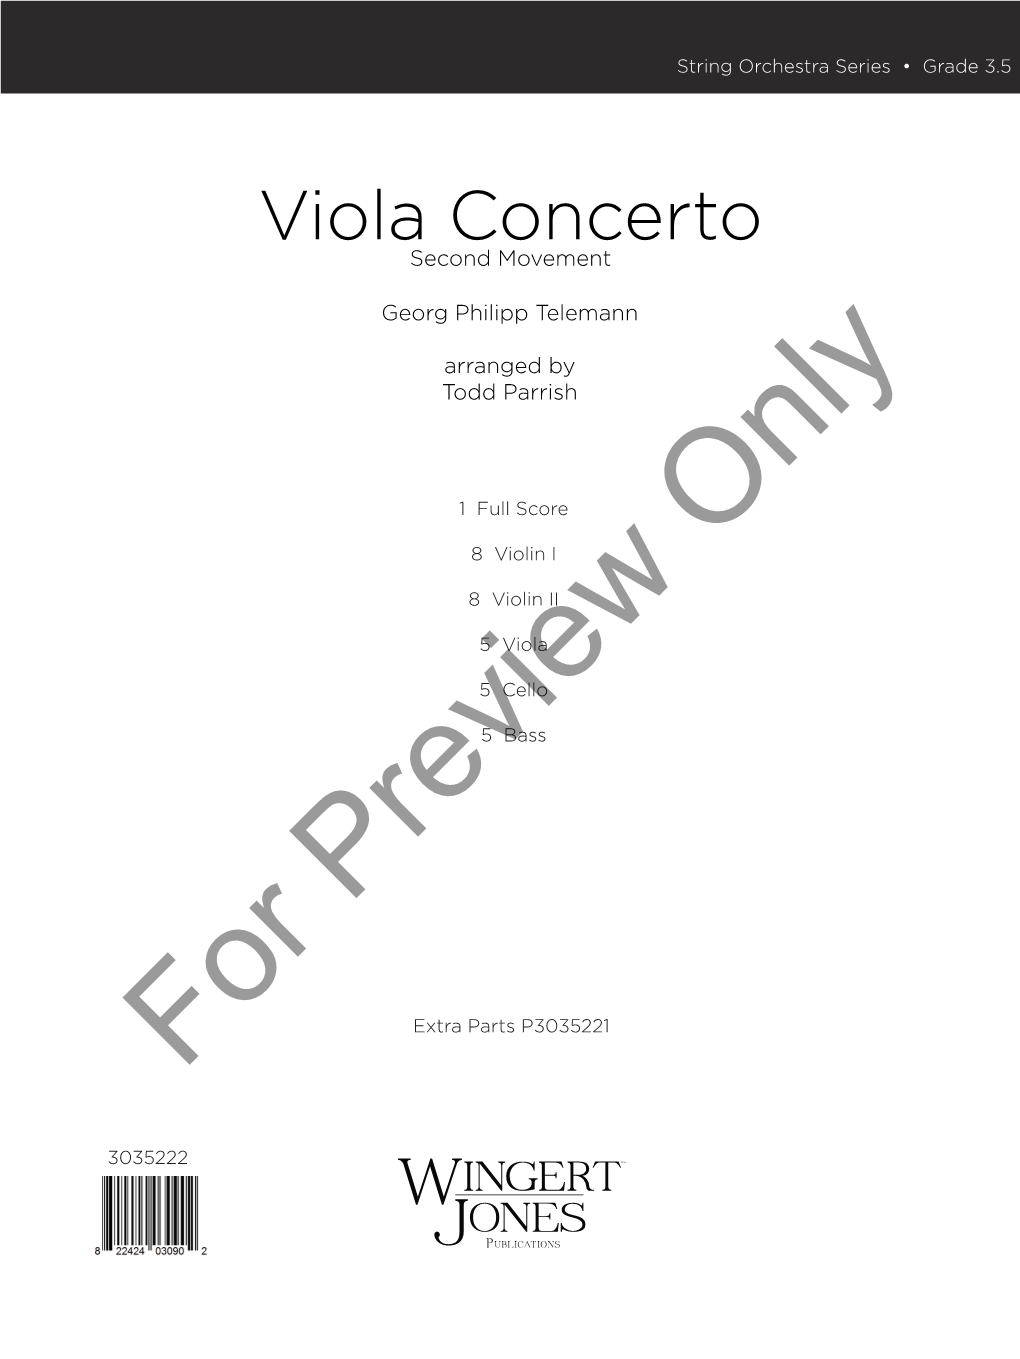 Viola Concerto Second Movement